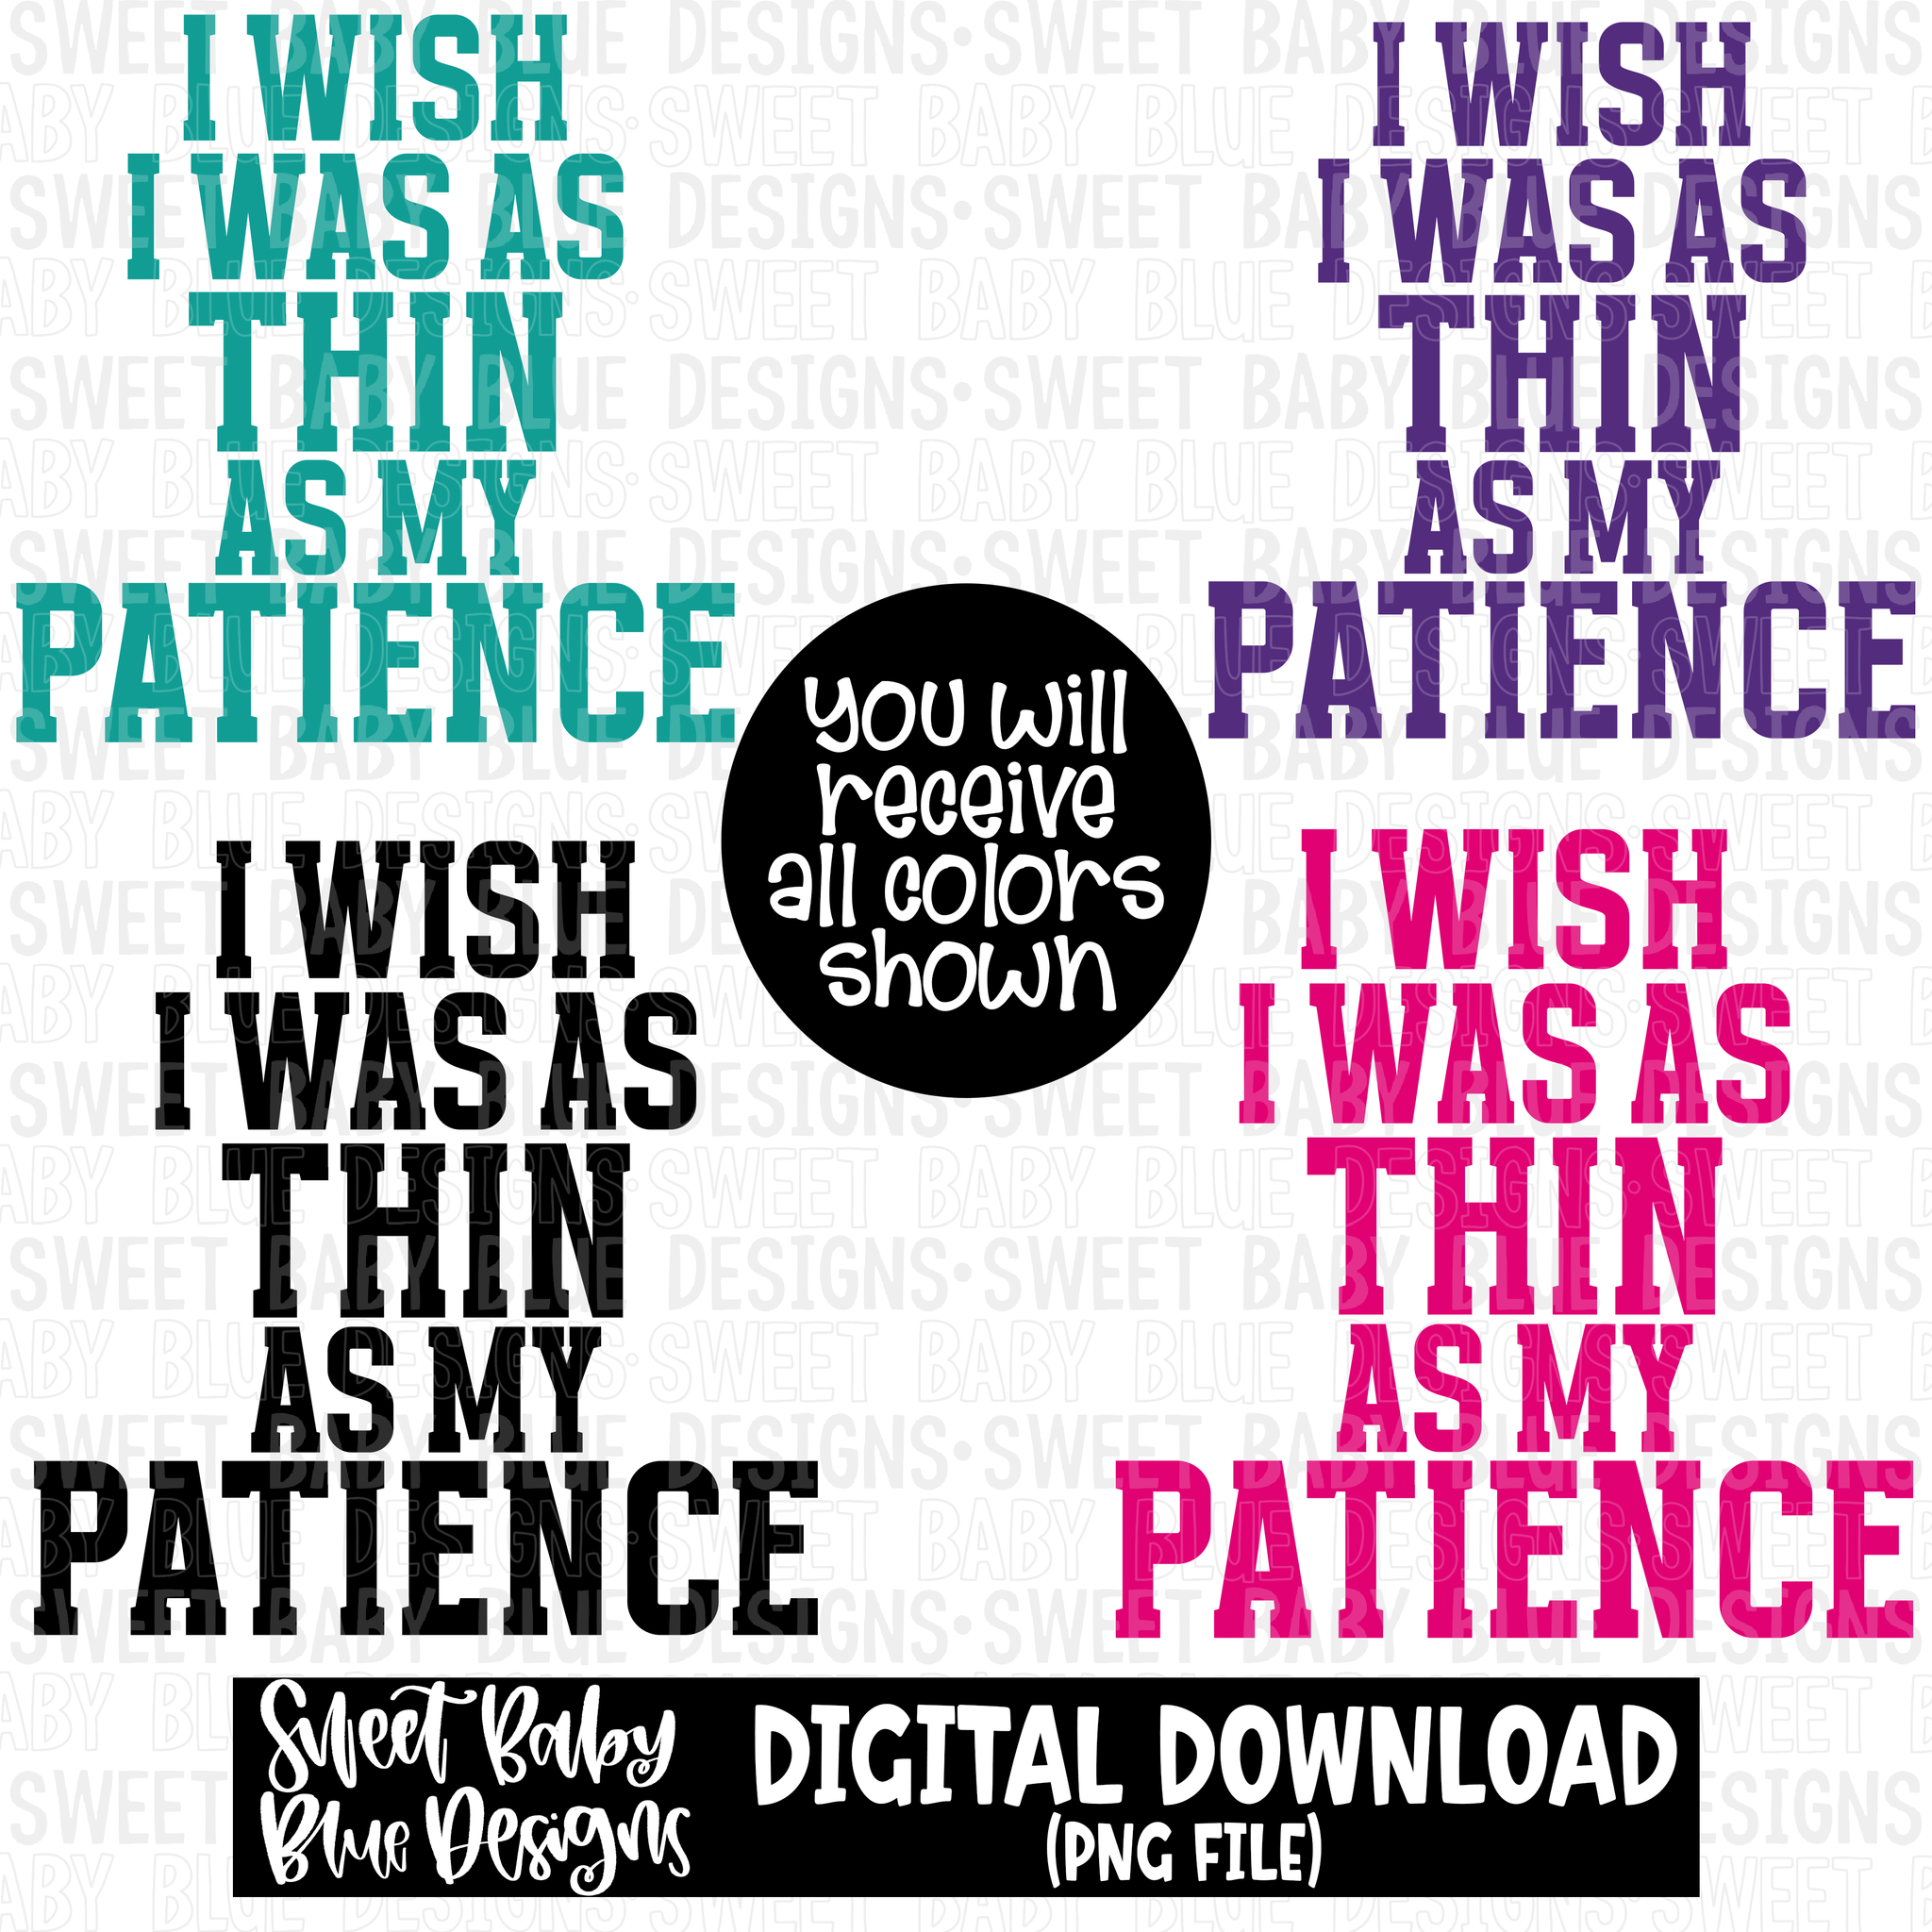 Wish - Digital Download